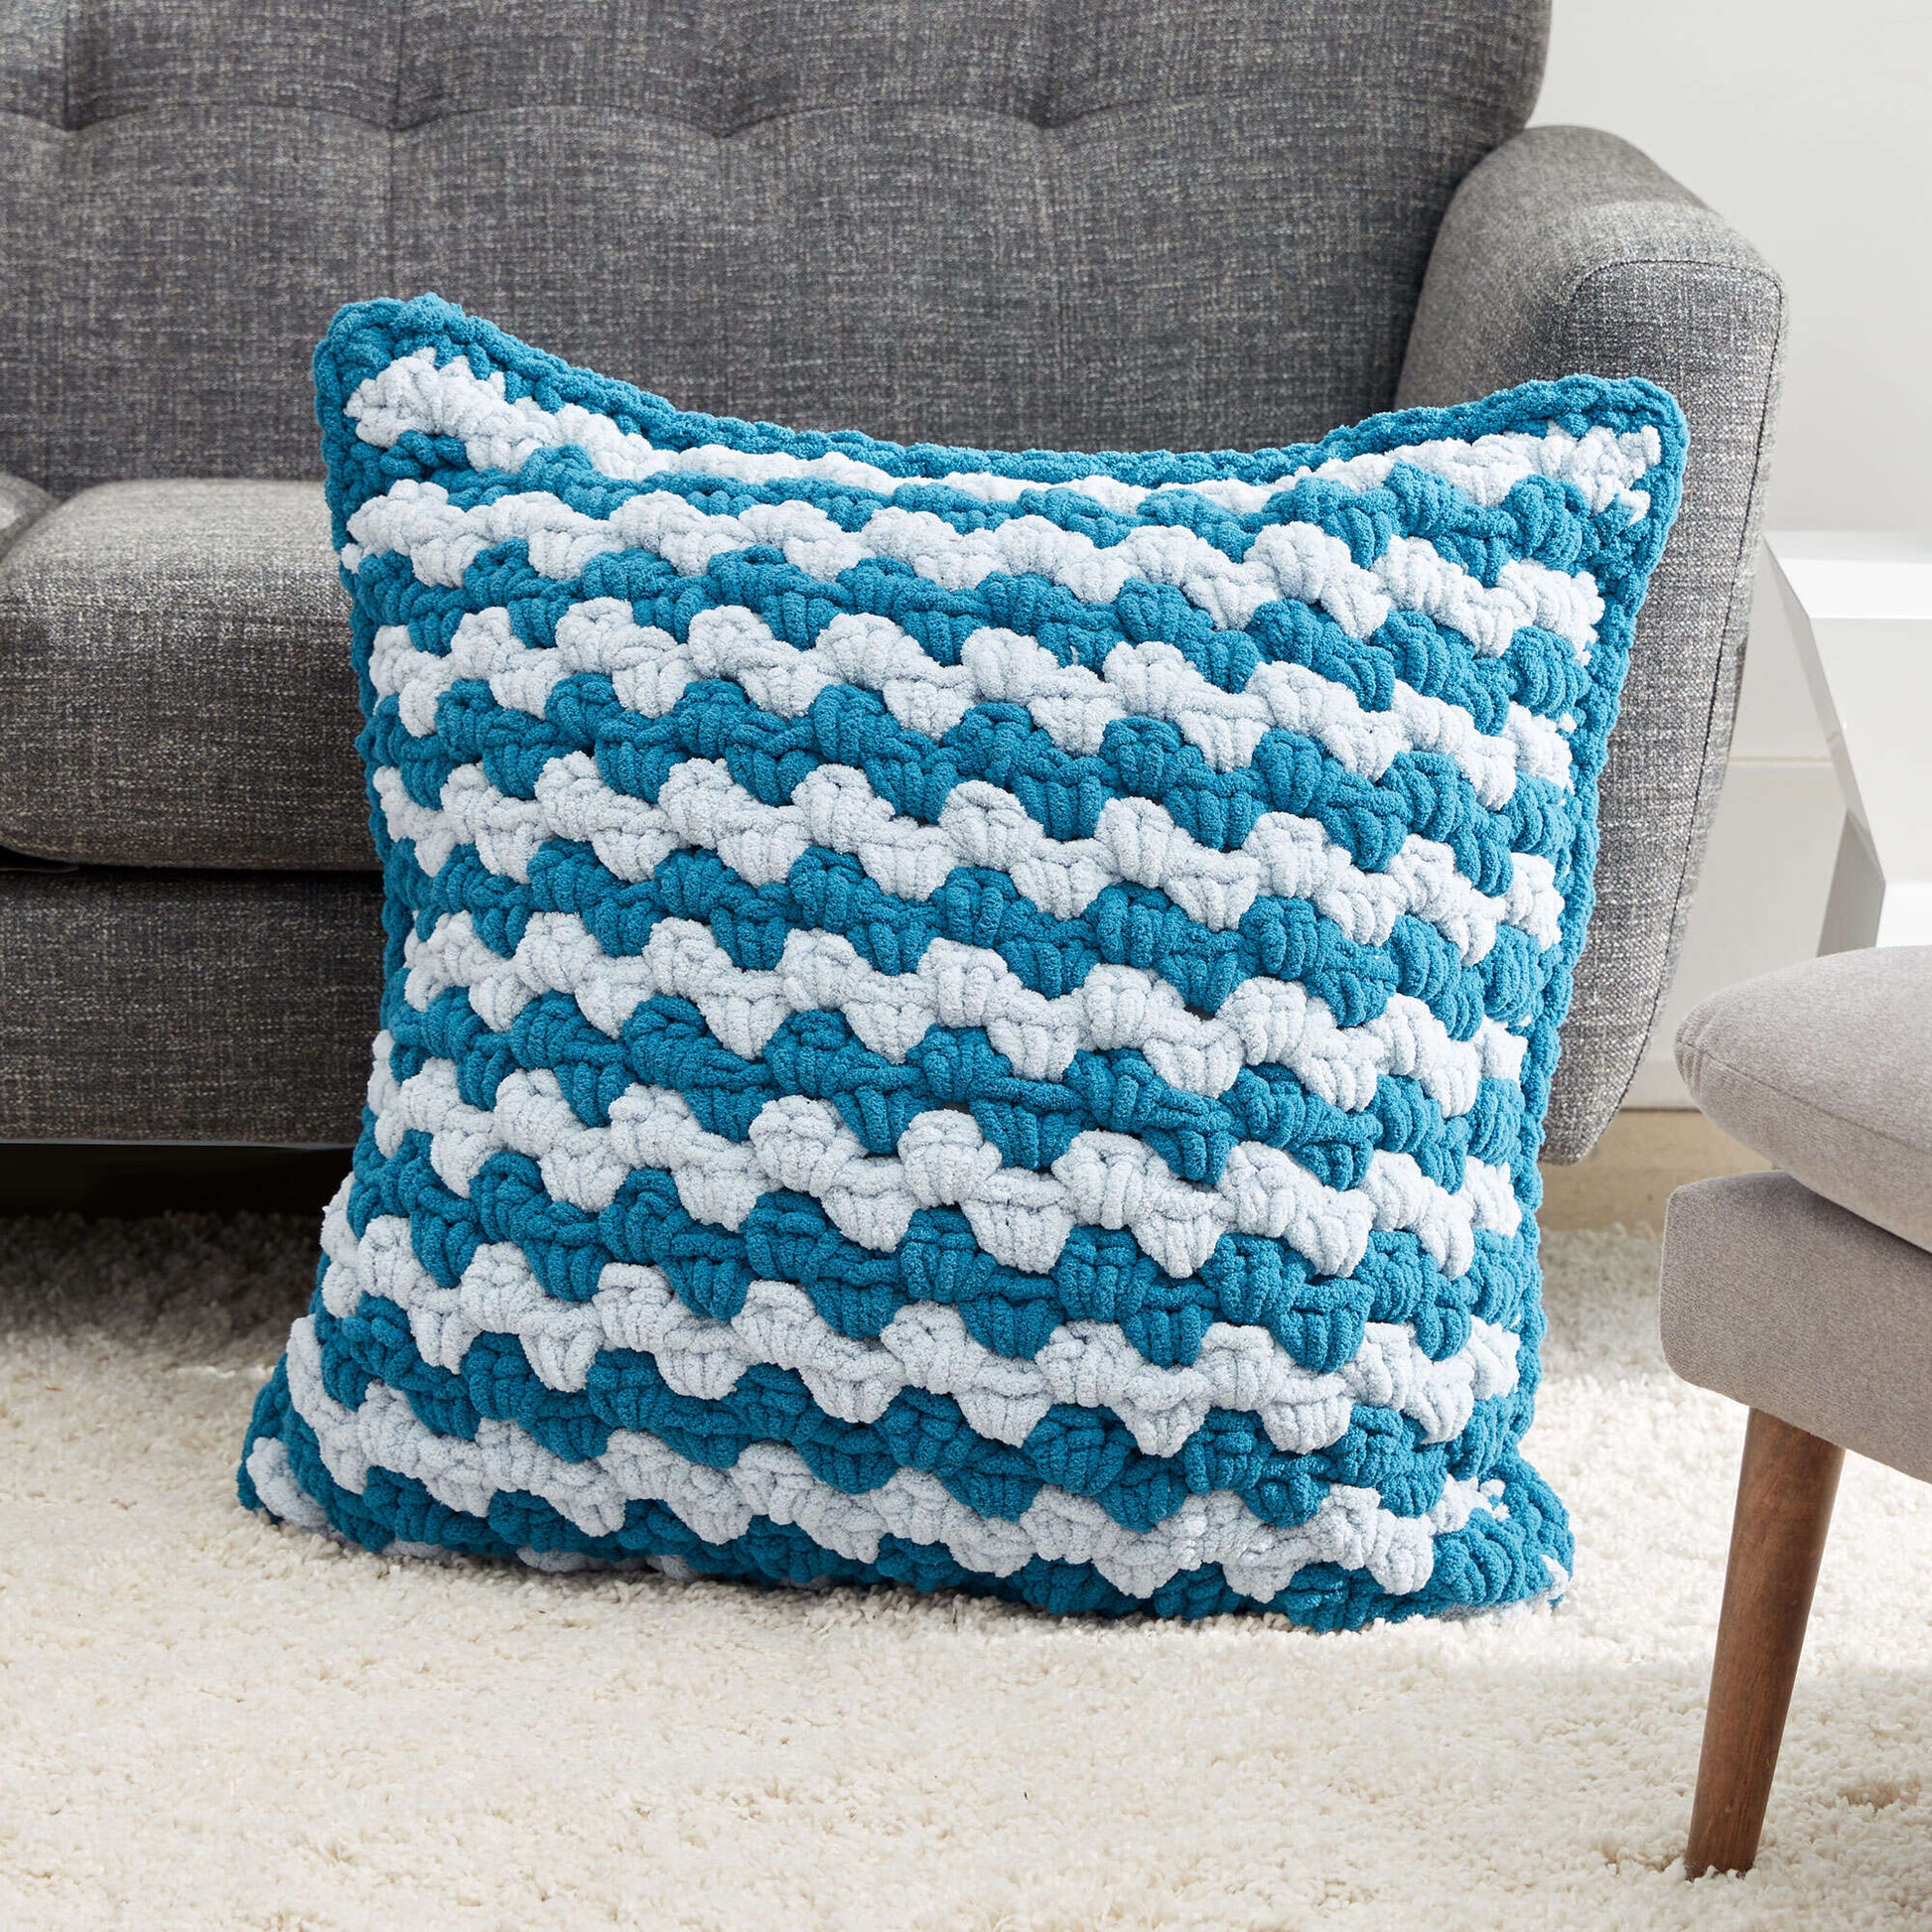 Bernat Granny Striped Crochet Floor Cushion Crochet Pillow made in Bernat Blanket Extra yarn